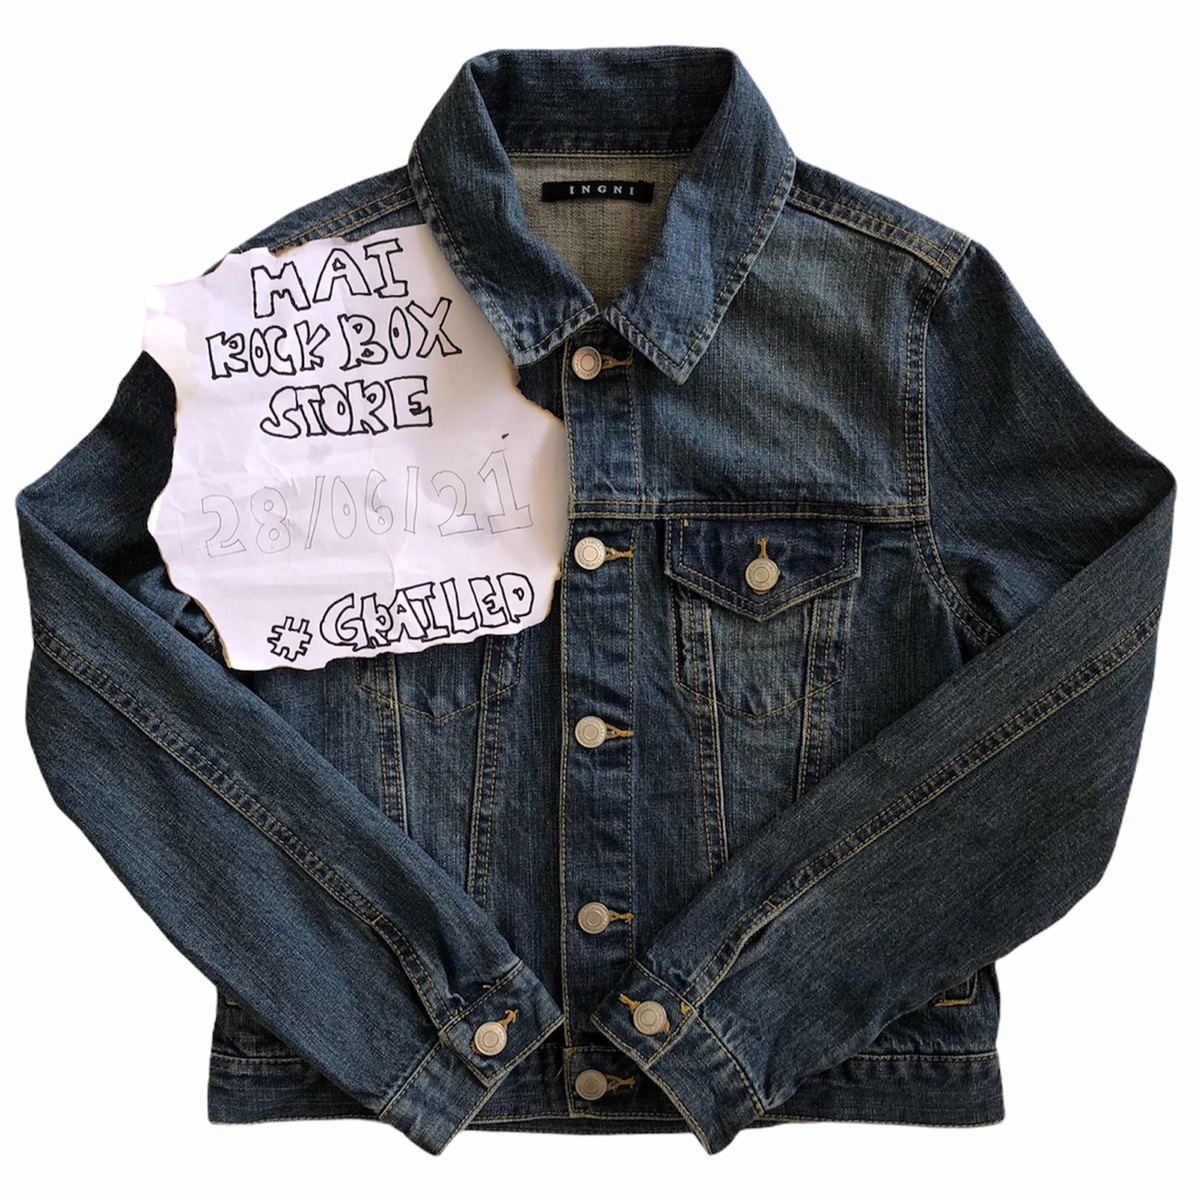 Archival Clothing - Vintage Denim Jacket by INGNI - 1